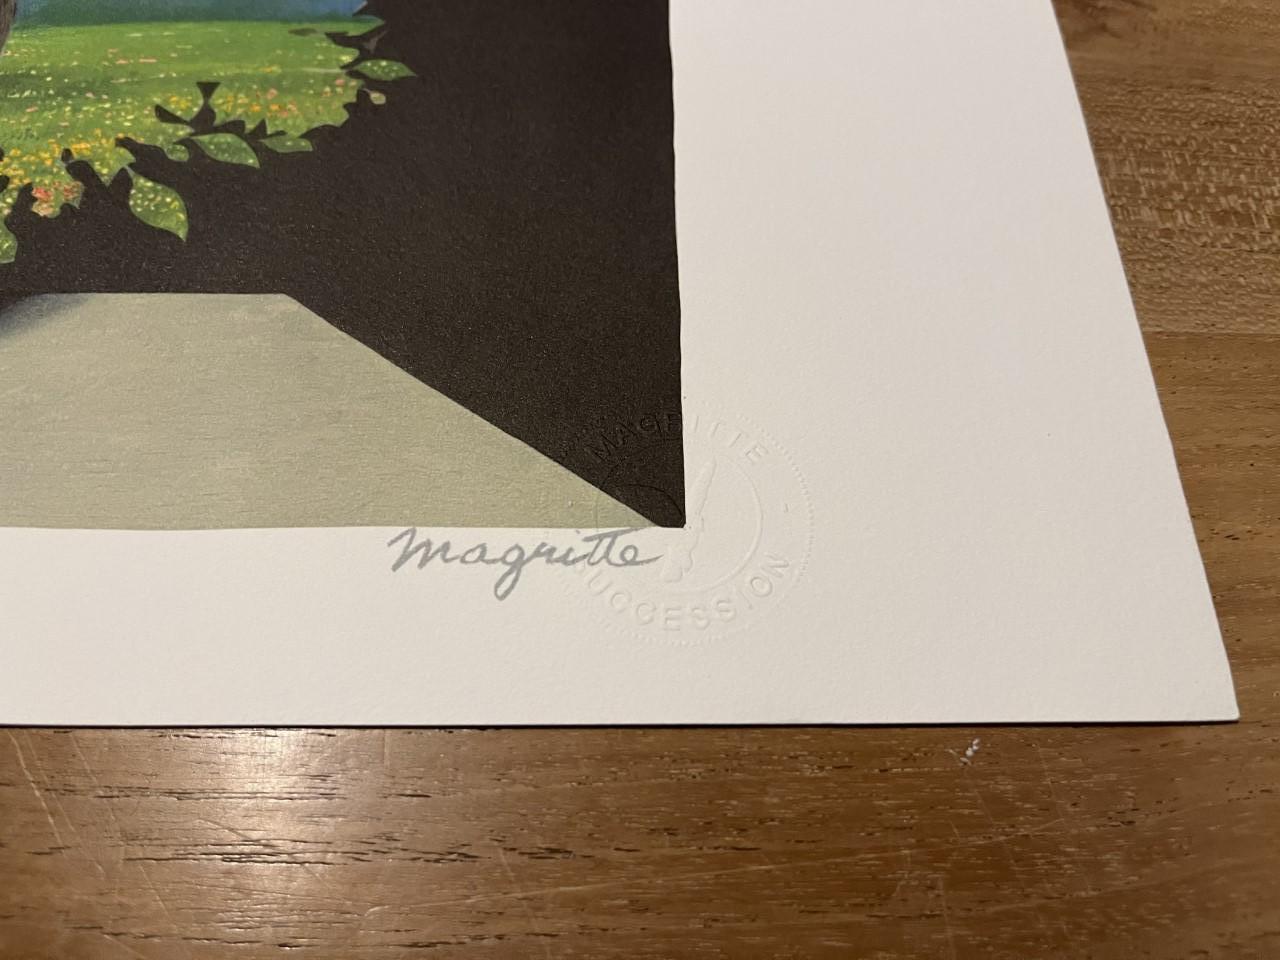 Le Plagiat - 20. Jahrhundert, Surrealistisch, Lithographie, Figurative Drucke (Surrealismus), Print, von (after) René Magritte